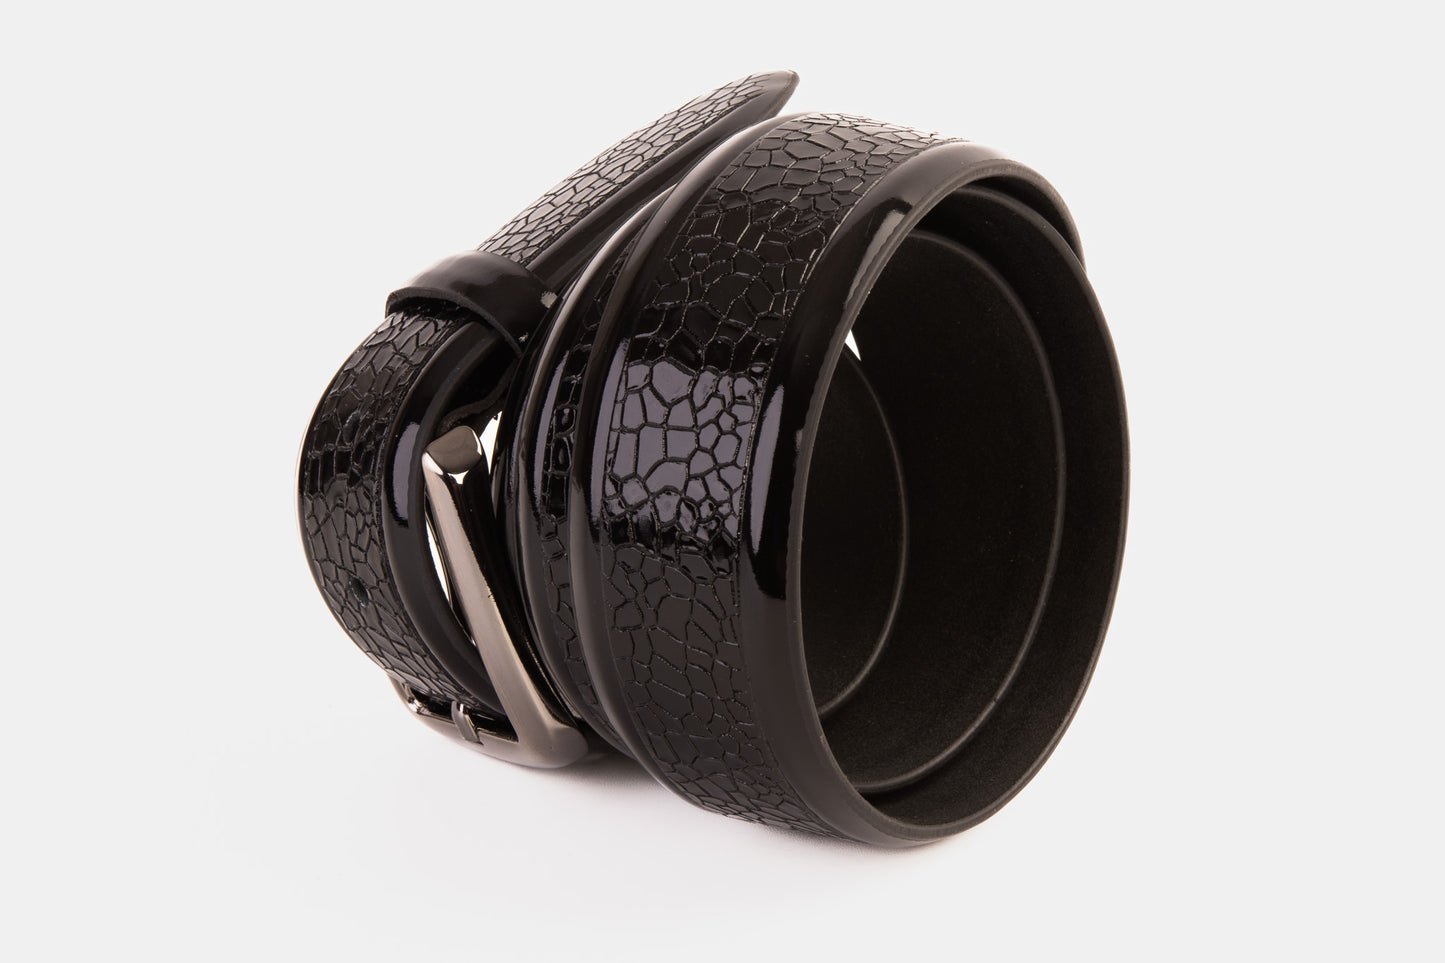 The Modica Black Patent Leather Belt